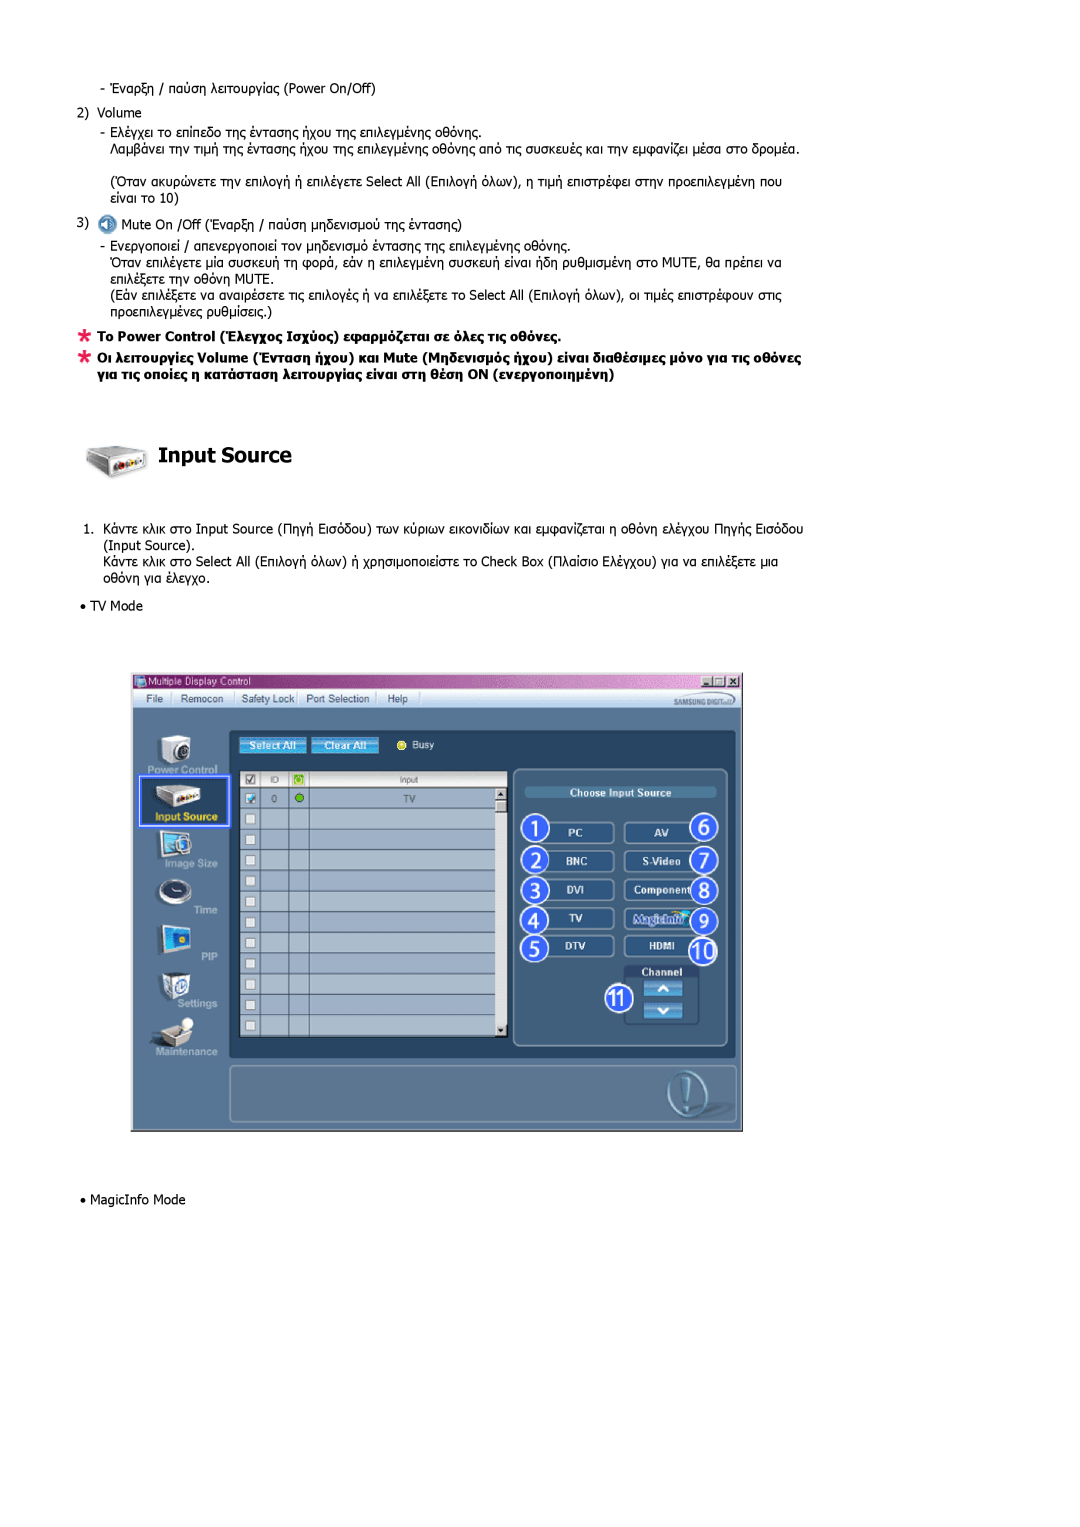 Samsung LH40MGQLBC/EN, LH40MGULBC/EN manual Input Source, Το Power Control Έλεγχος Ισχύος εφαρμόζεται σε όλες τις οθόνες 